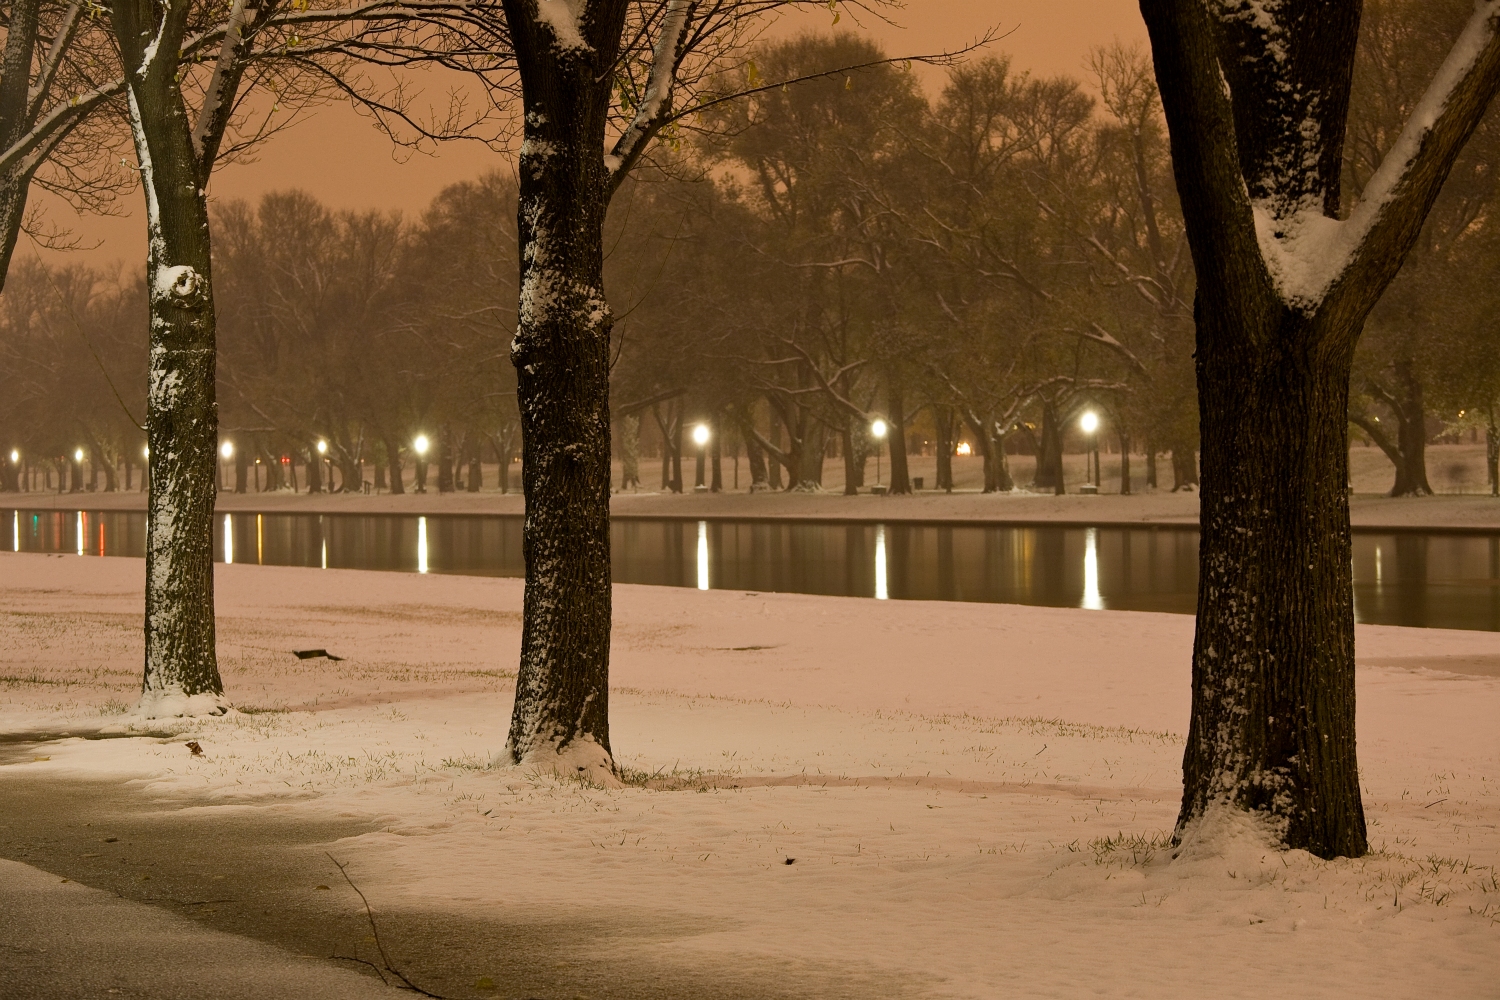 A snowy evening in December 2007